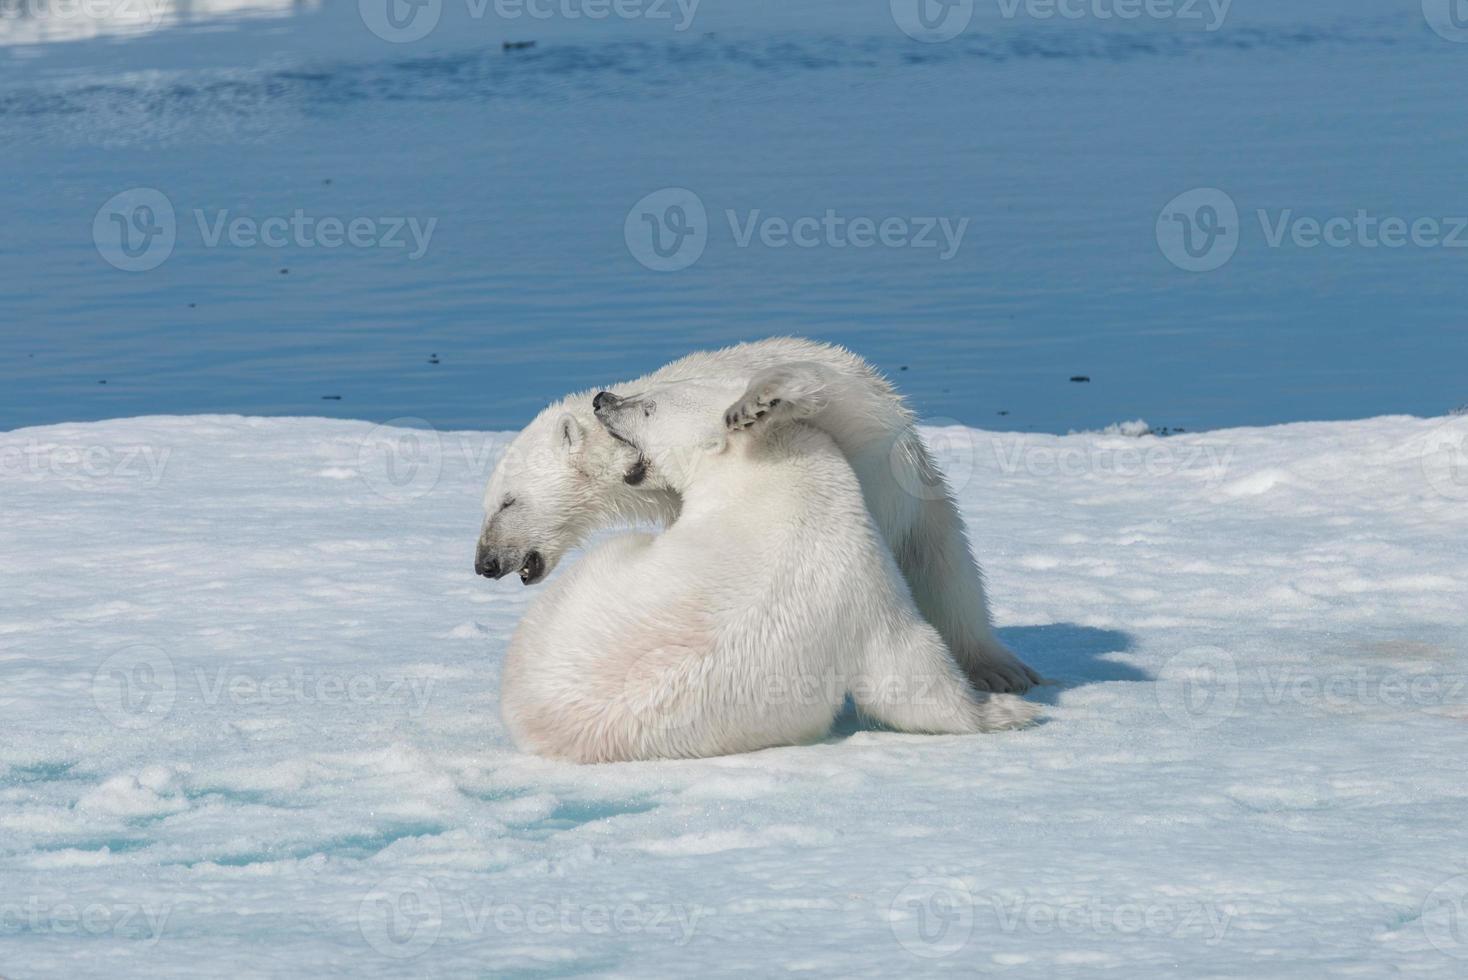 två unga vilda isbjörnungar som leker på packis i ishavet, norr om svalbard foto